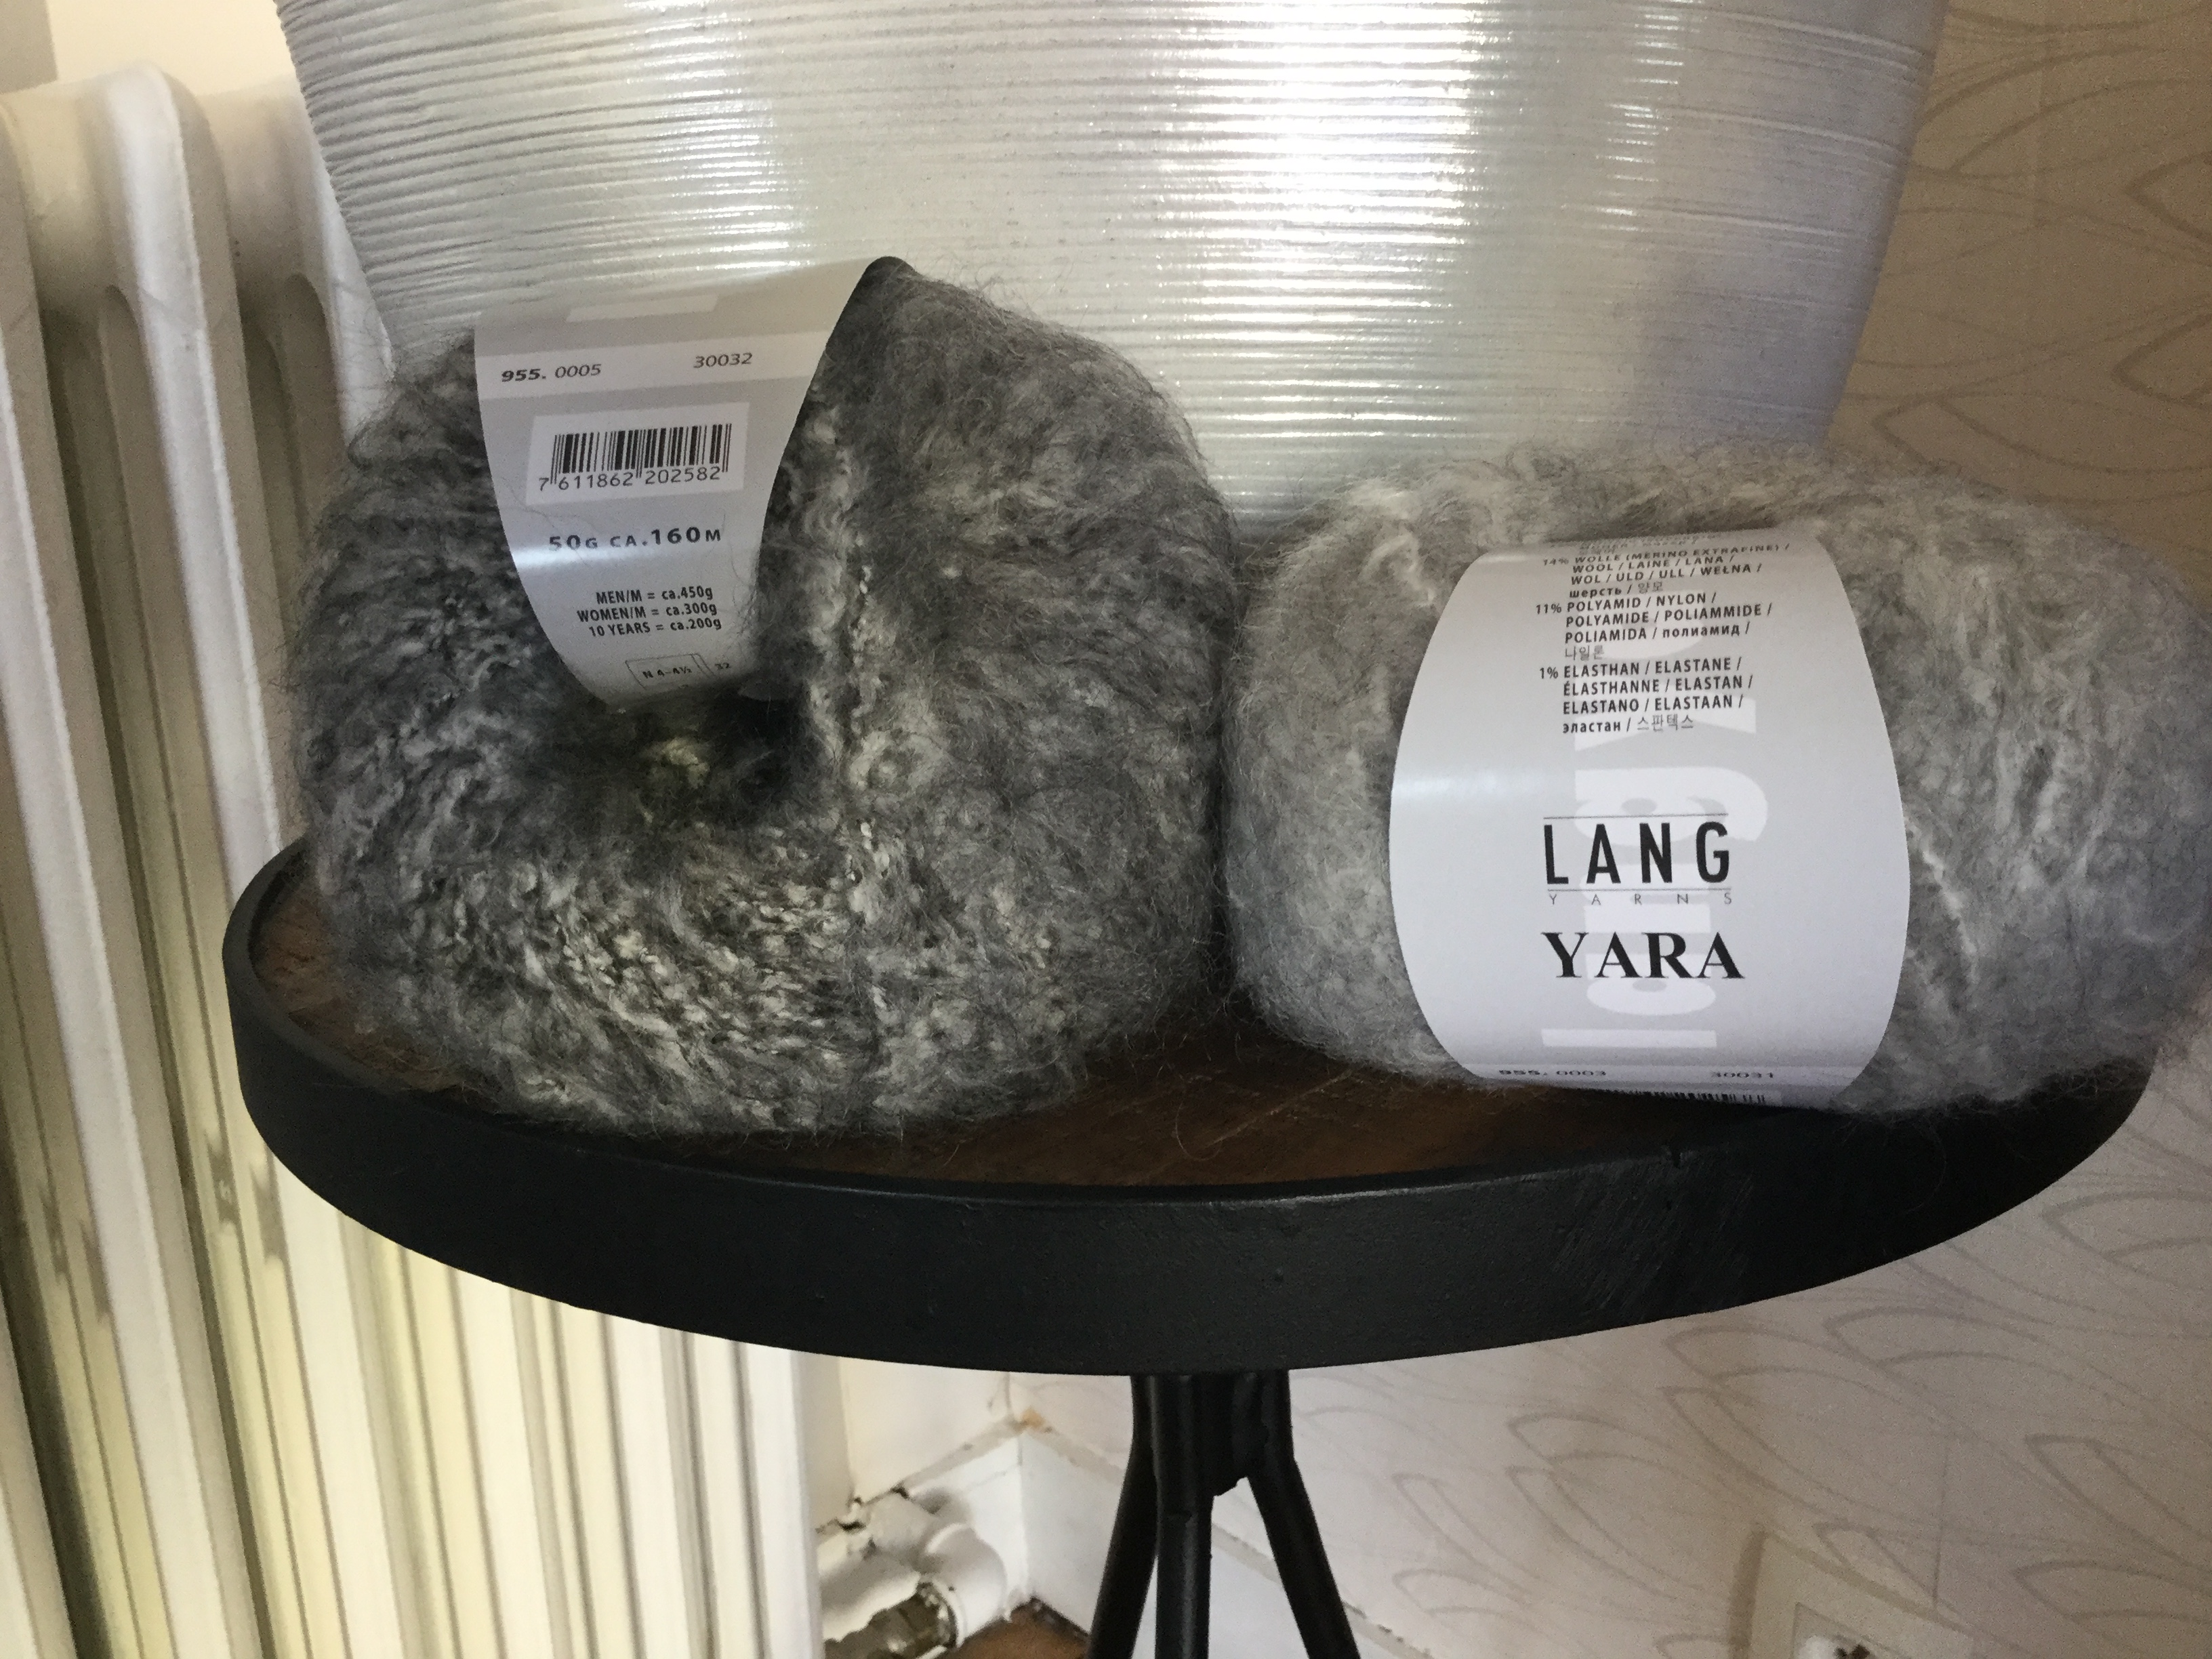 Two balls of fuzzy yarn in shades of grey.